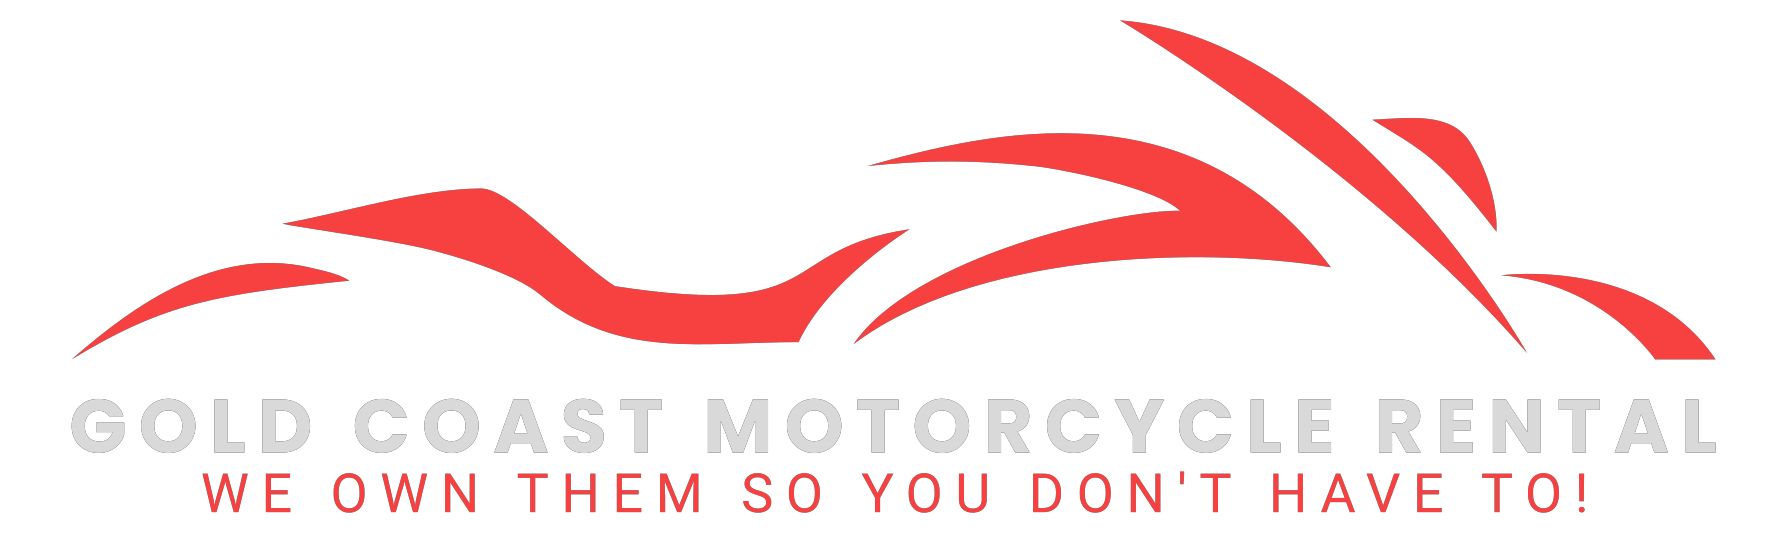 Gold Coast Motorcycle Rental